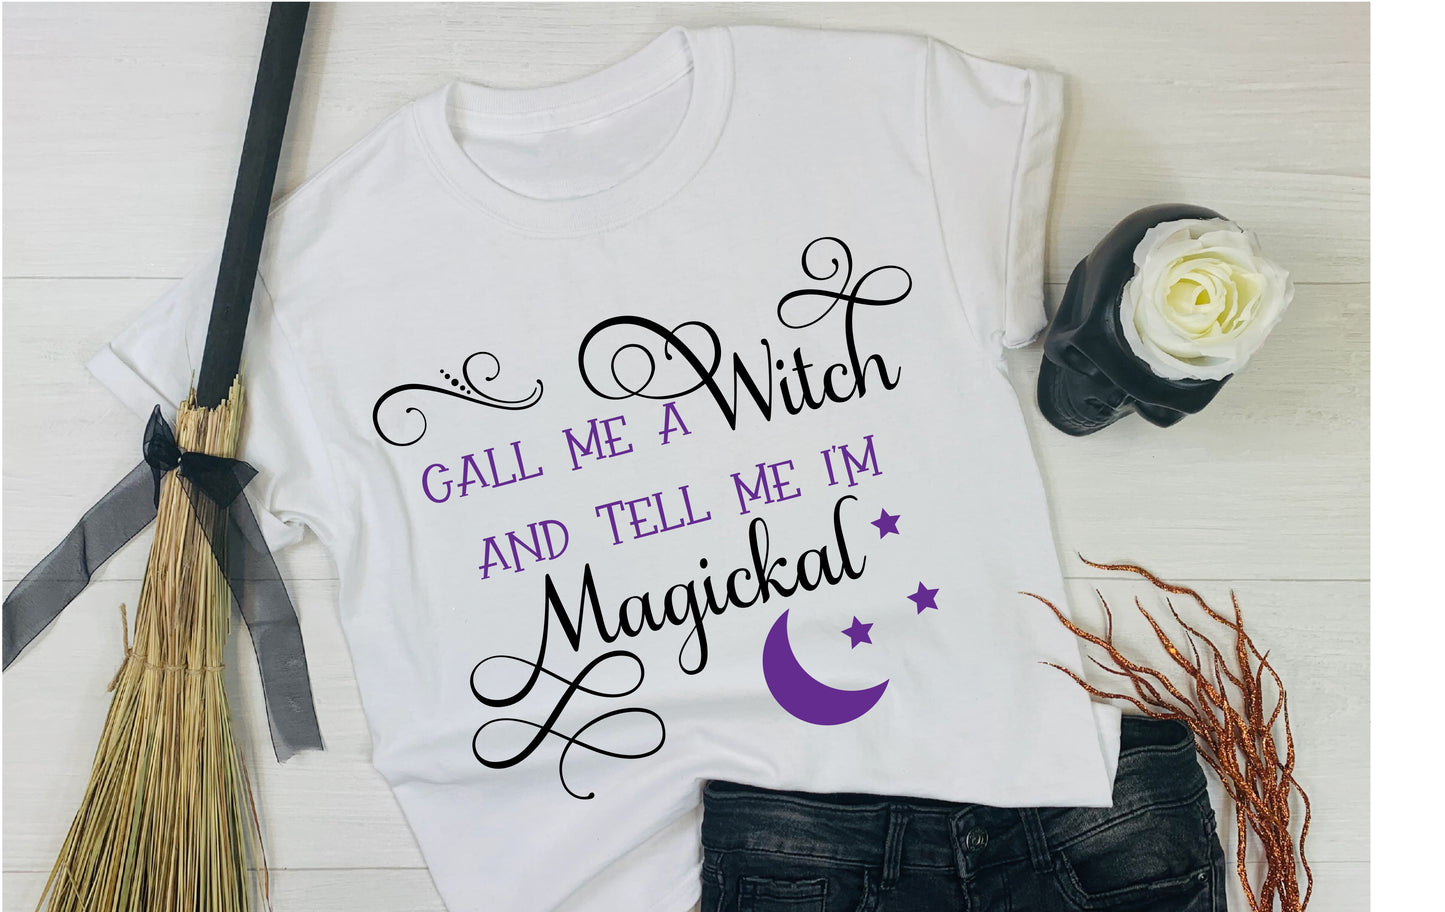 Fun, custom "Call me a Witch" T-shirt